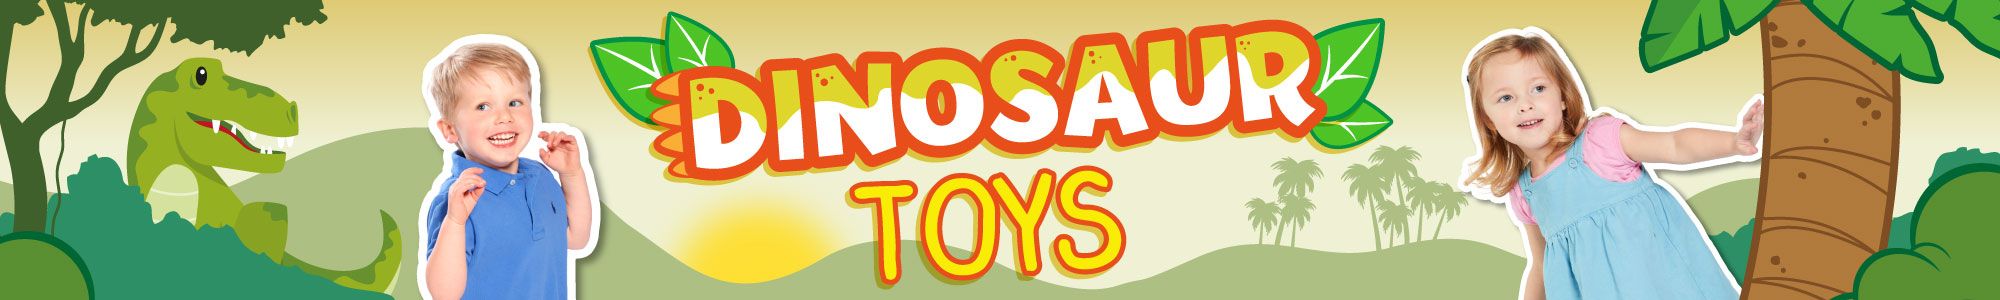 Dinosaur-Toys_Page-Banner_2000x300.jpg